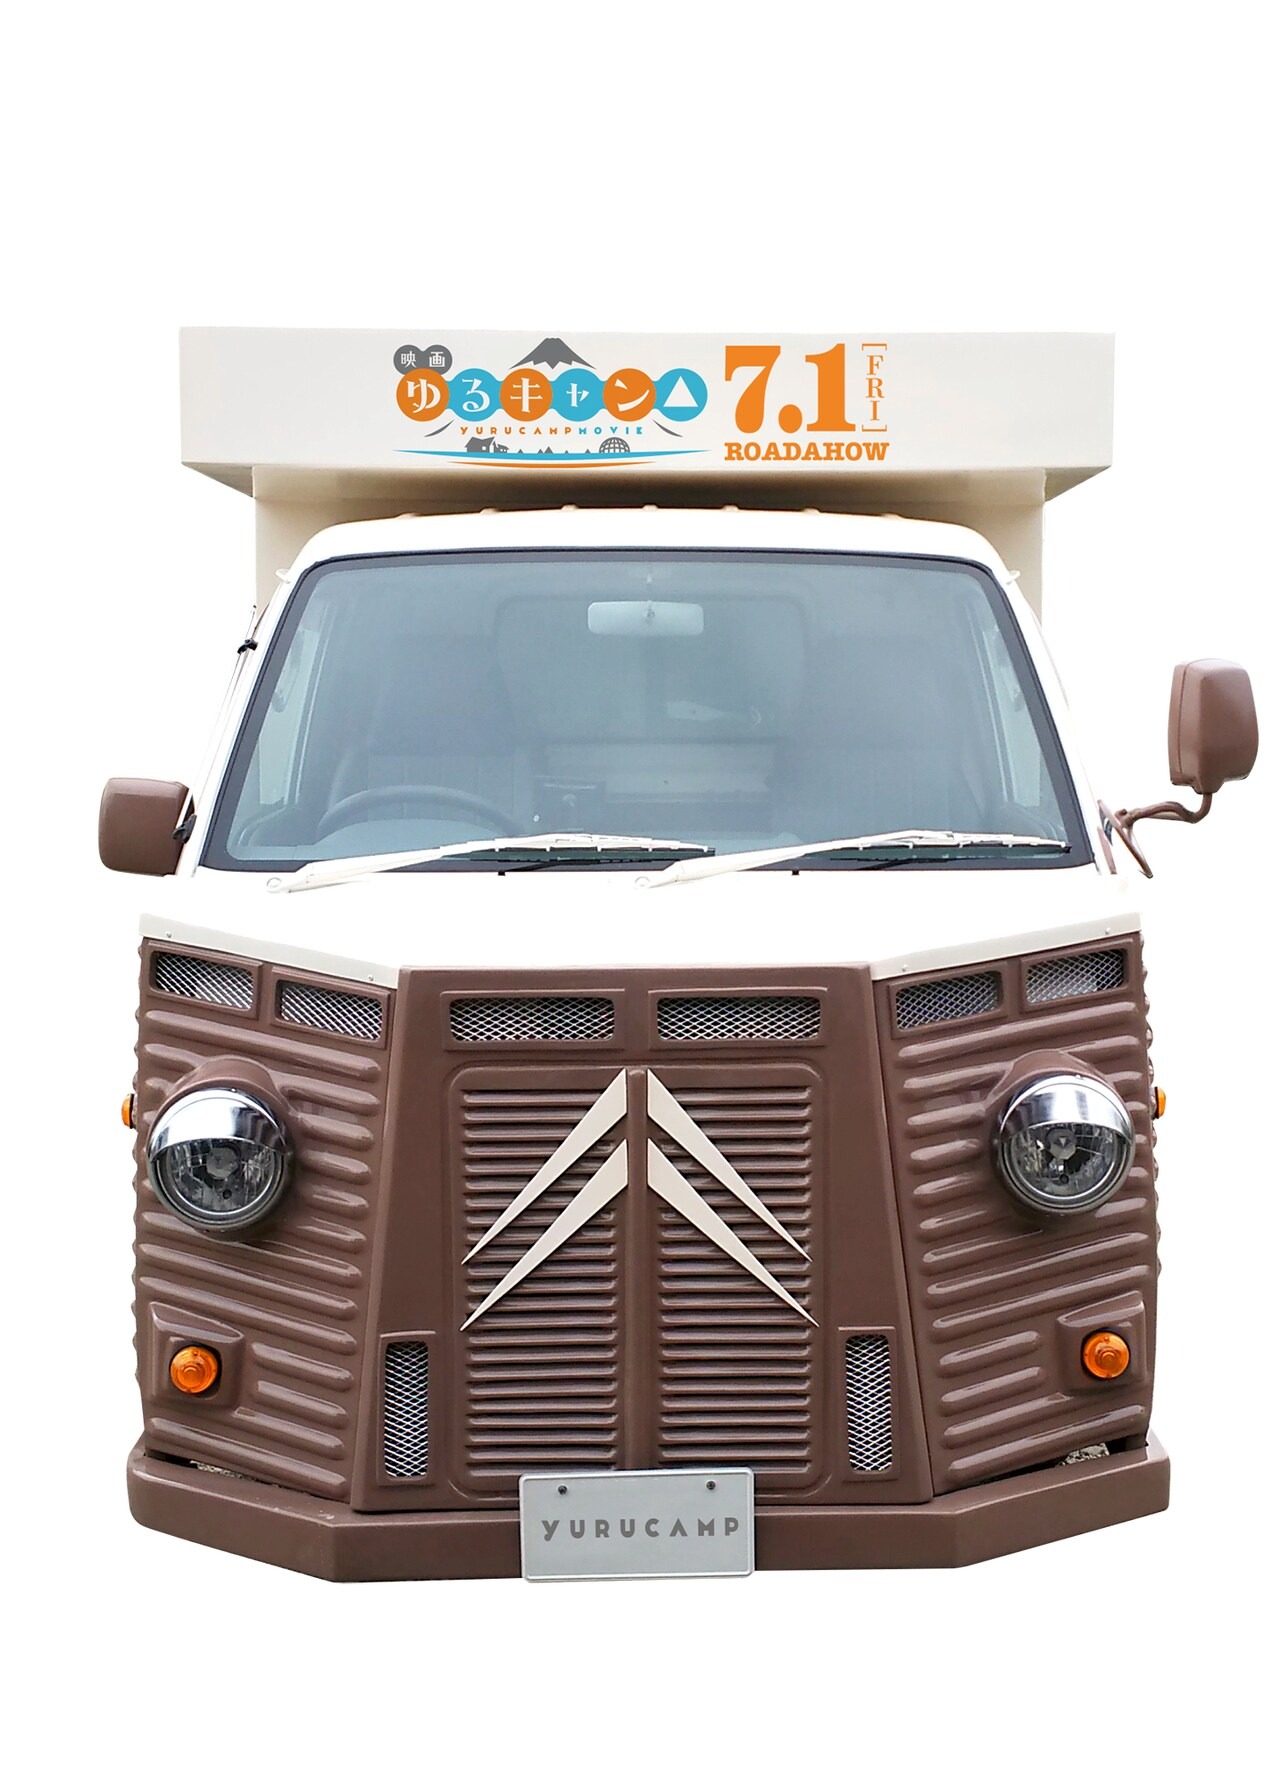  Laid-Back Camp anime film kitchen car